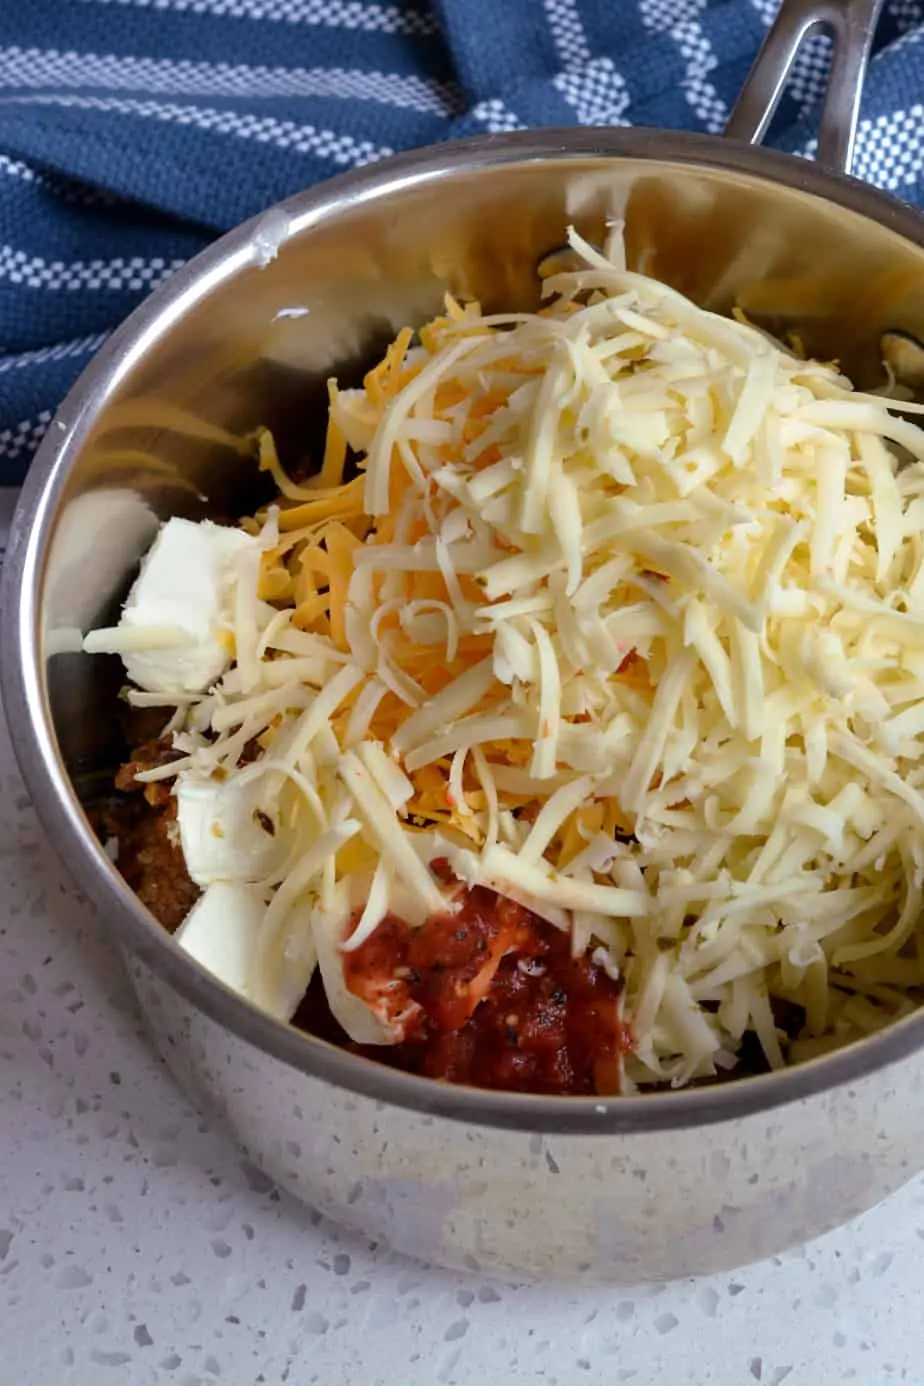 How to make Chili Cheese Dip